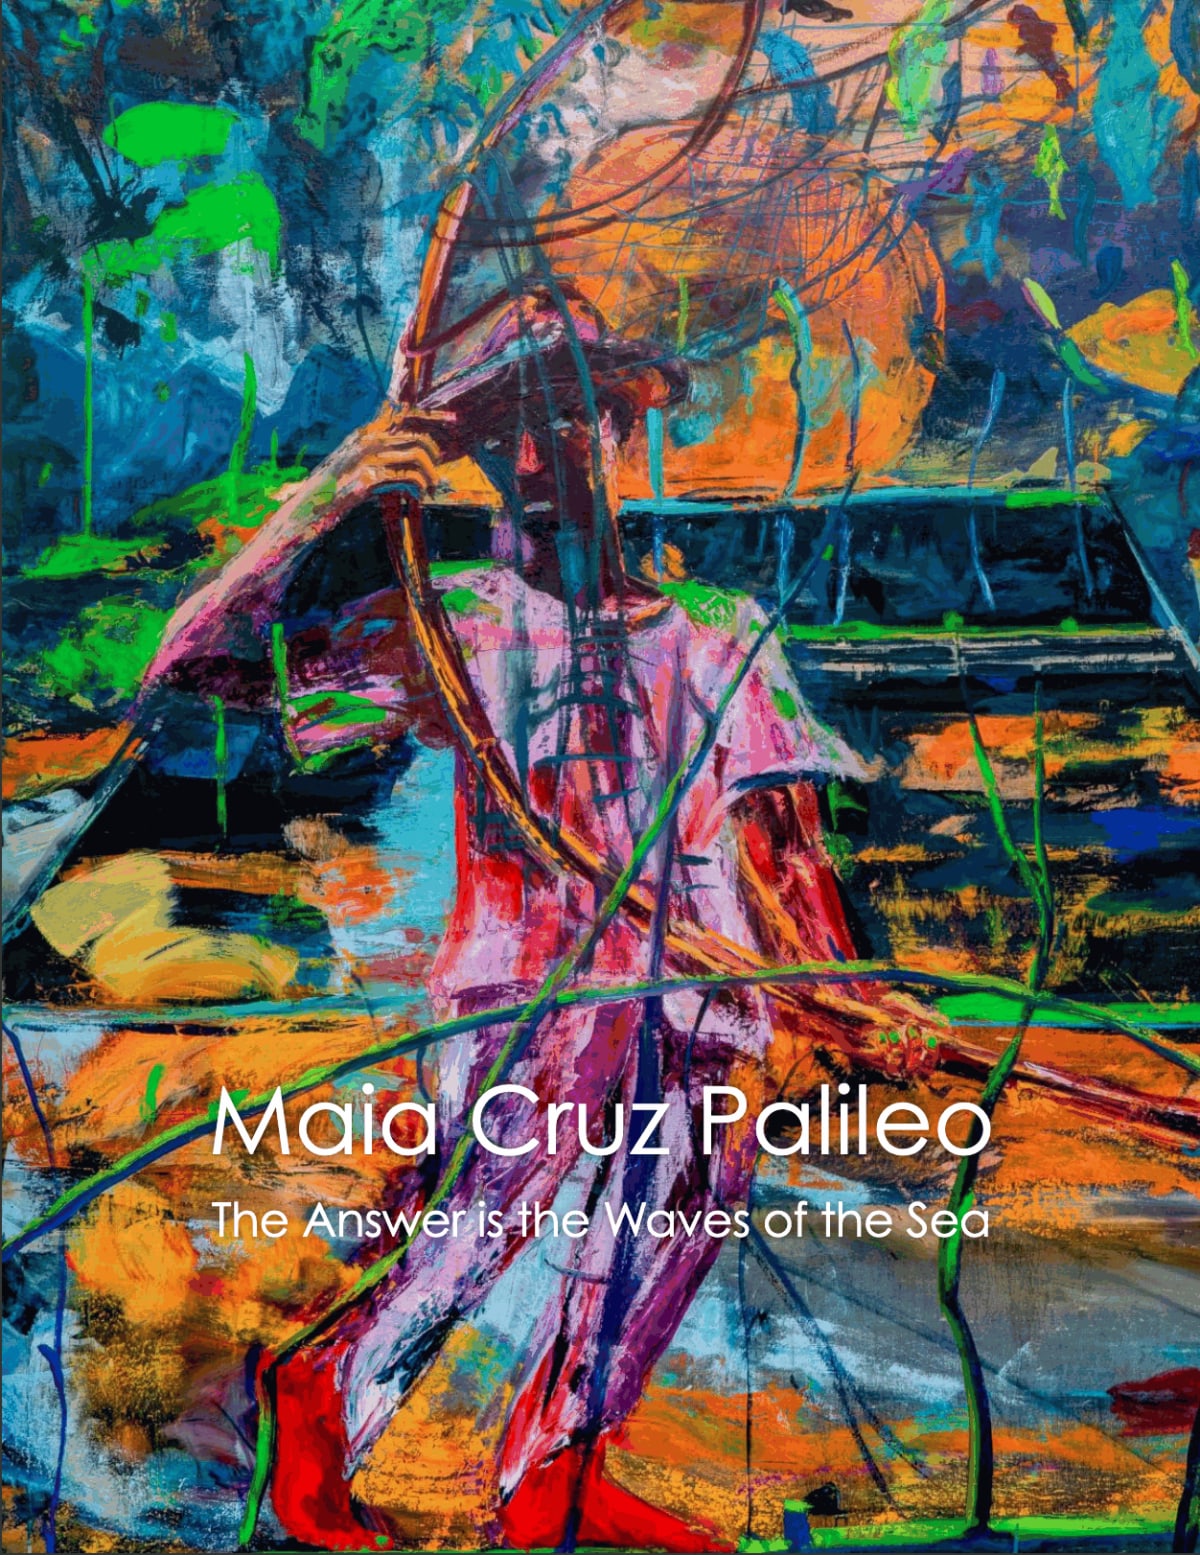 Maia Cruz Palileo: The Answer is the Waves of the Sea